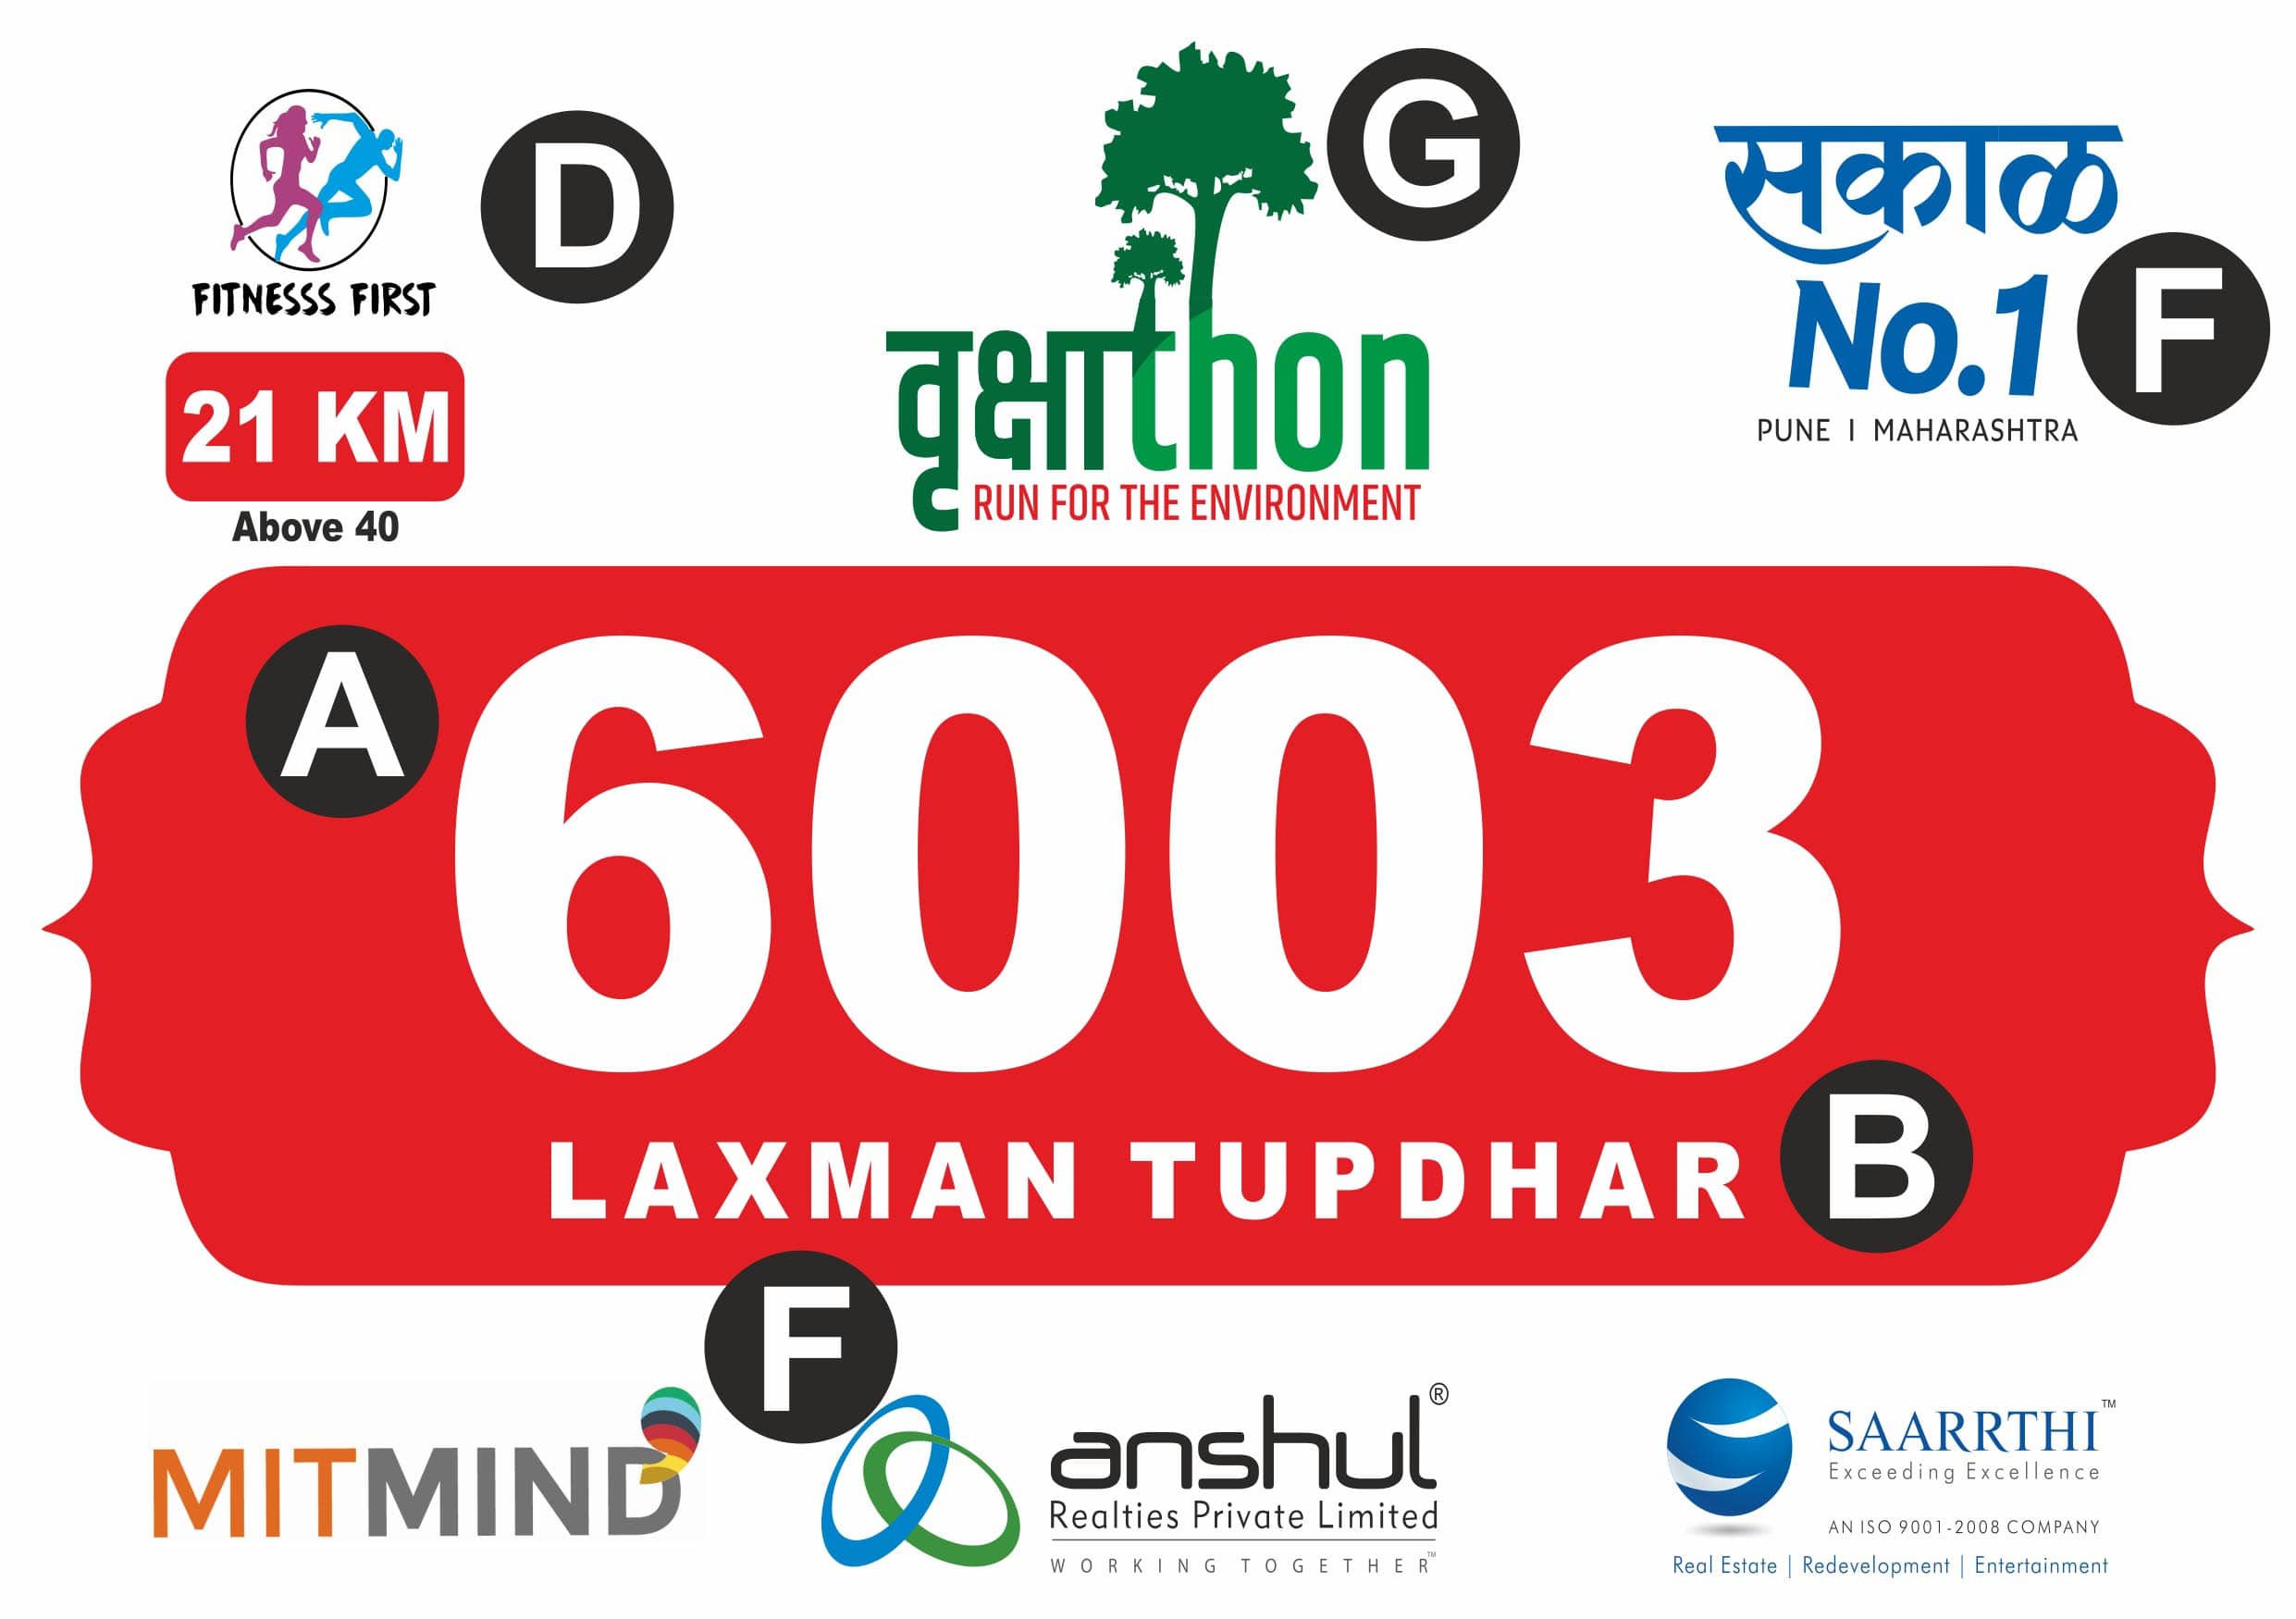 marathon bib contents like runner number, name, race category, sponsors' name, organizer logo, etc.